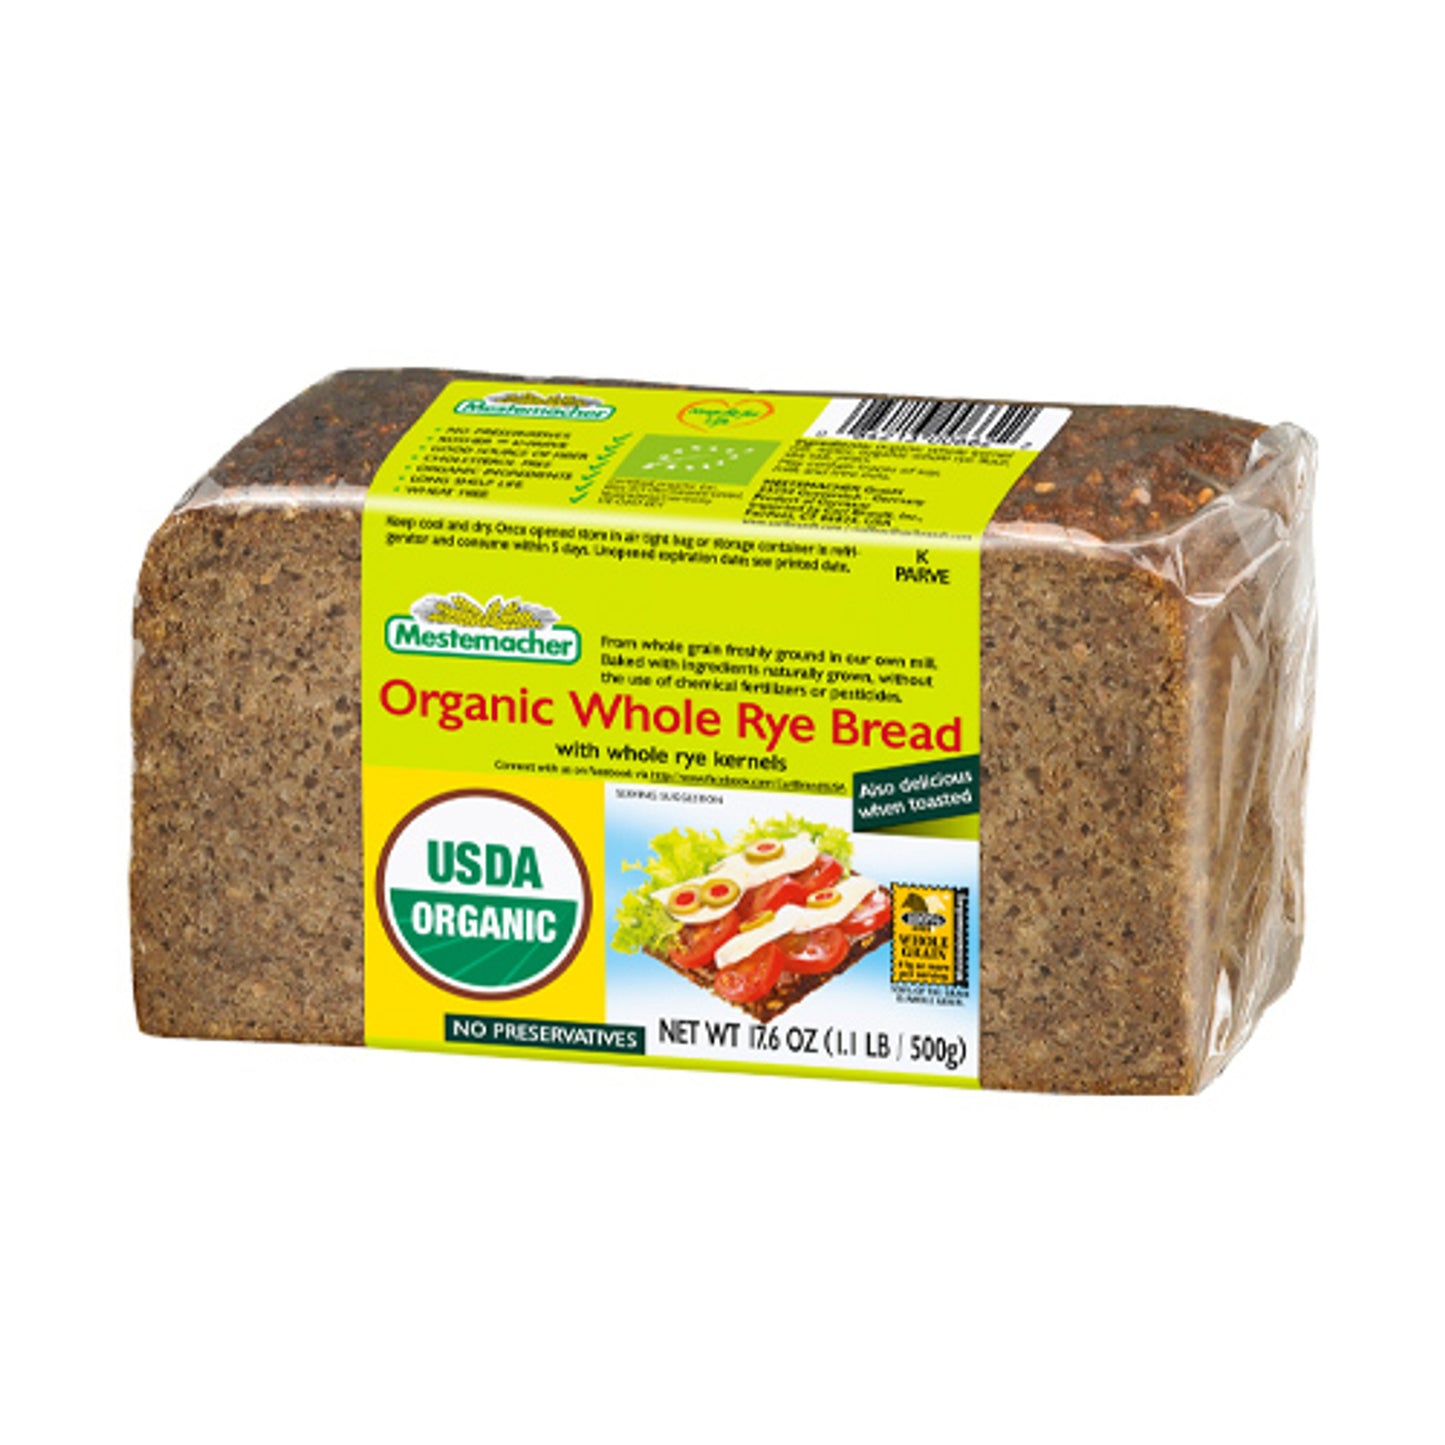 Mestemacher Organic Whole Rye Bread 17.6 oz